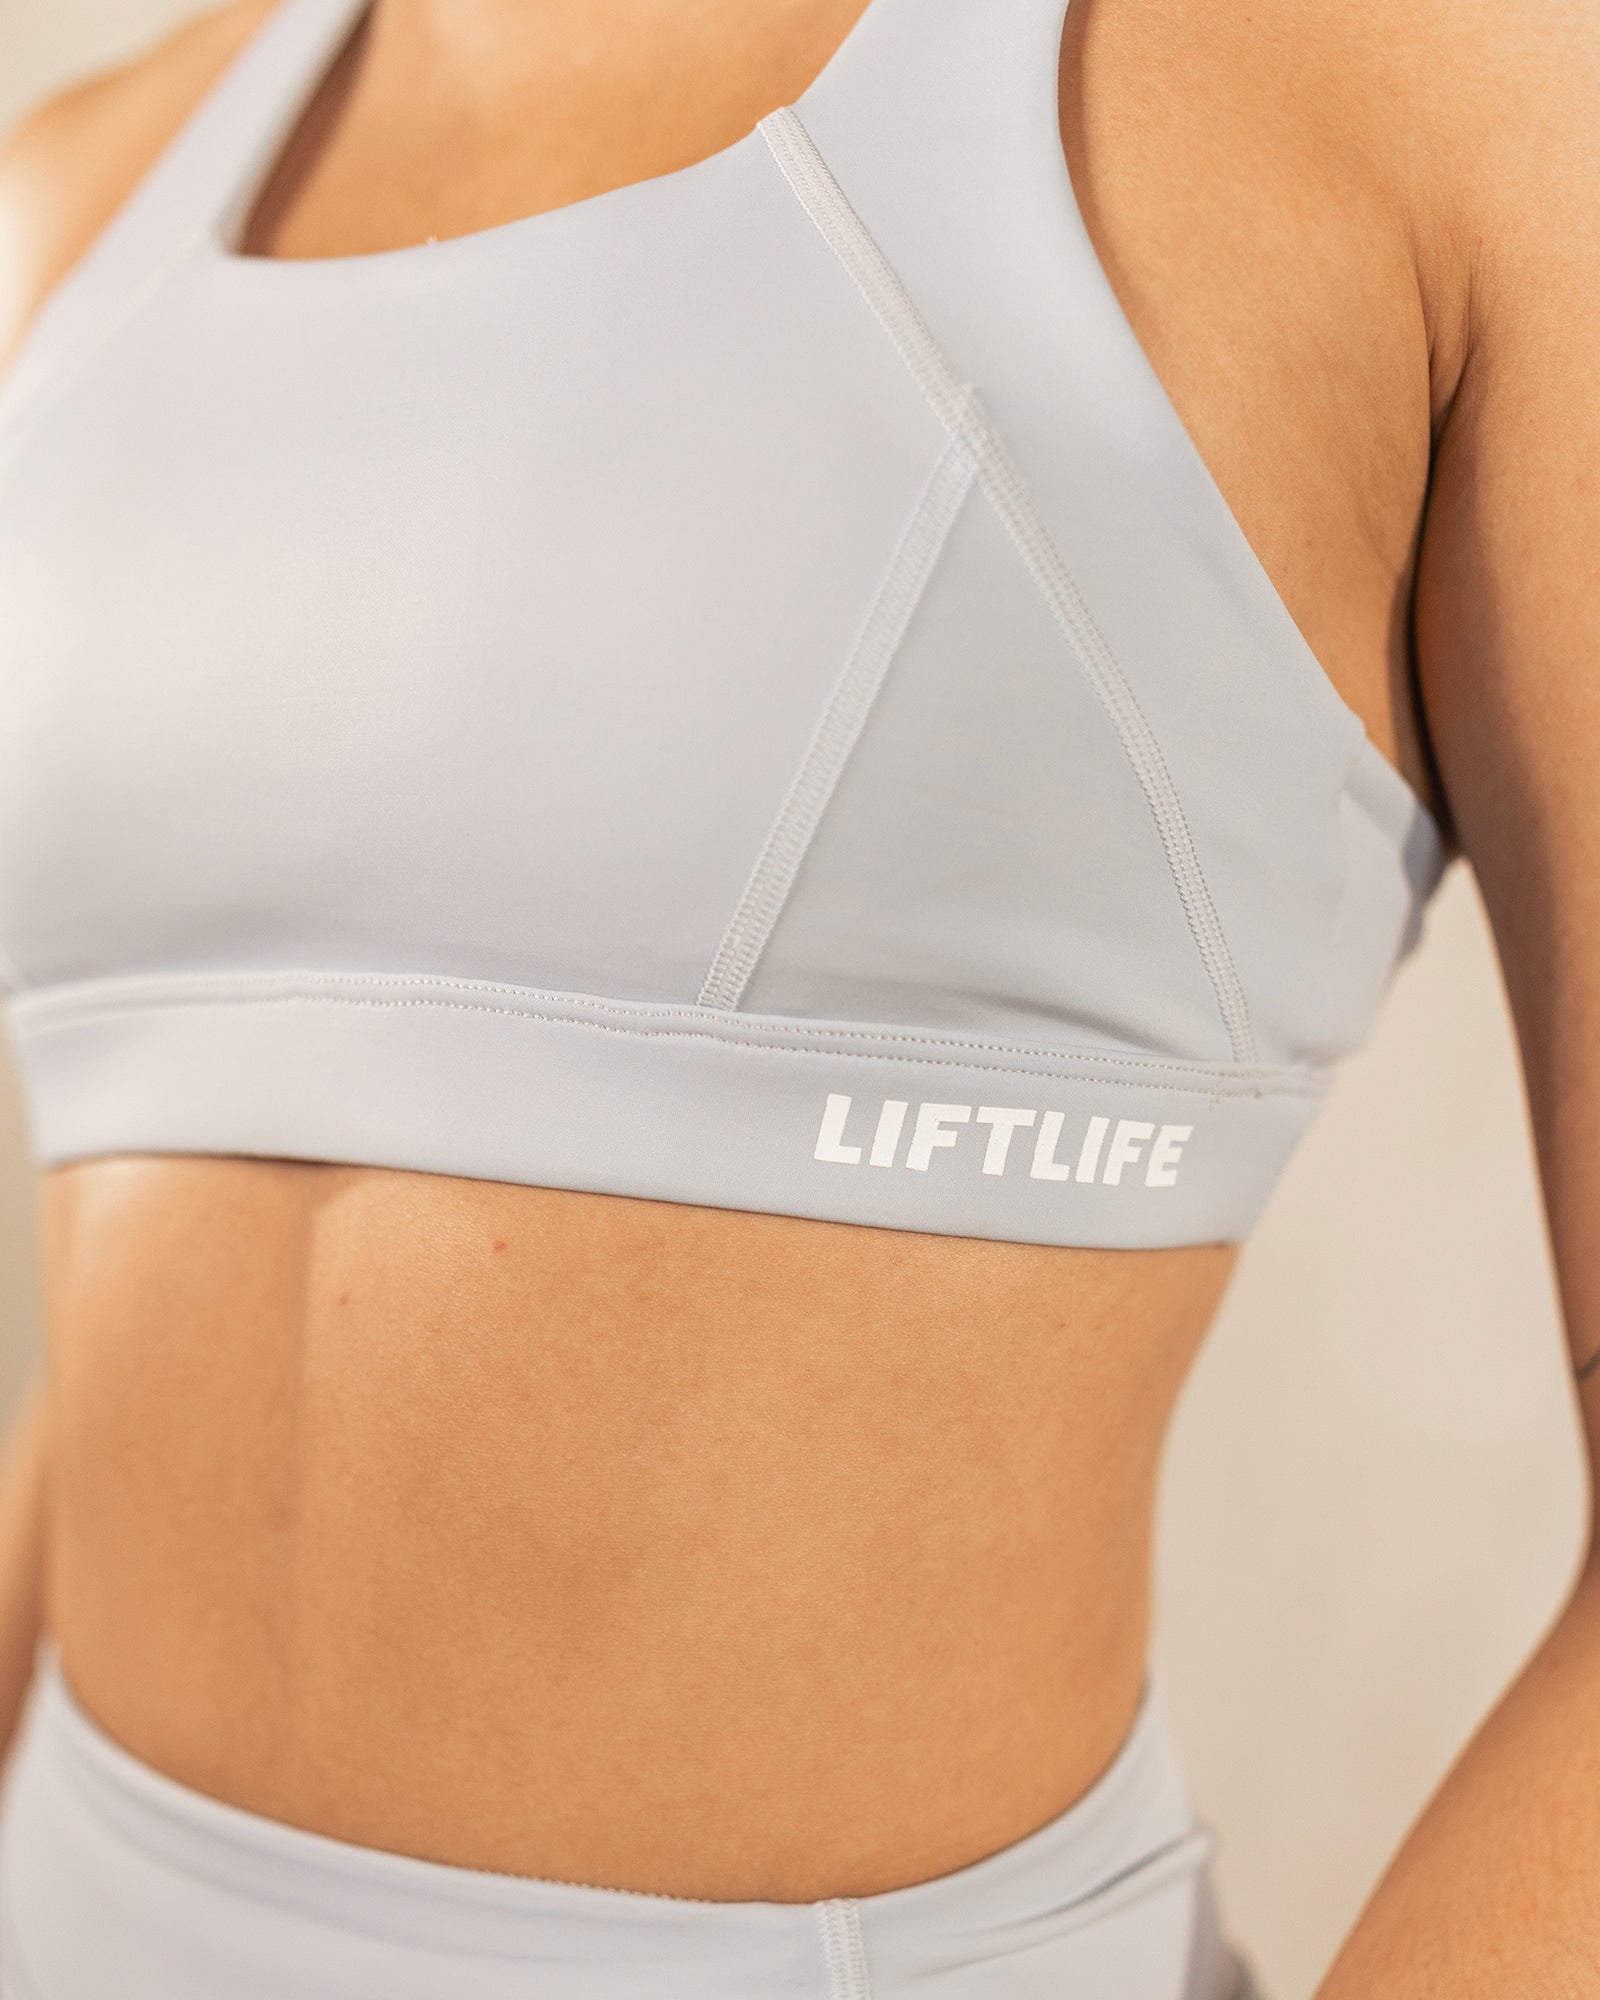 liftlife-inspire-sports-bra-2.jpg